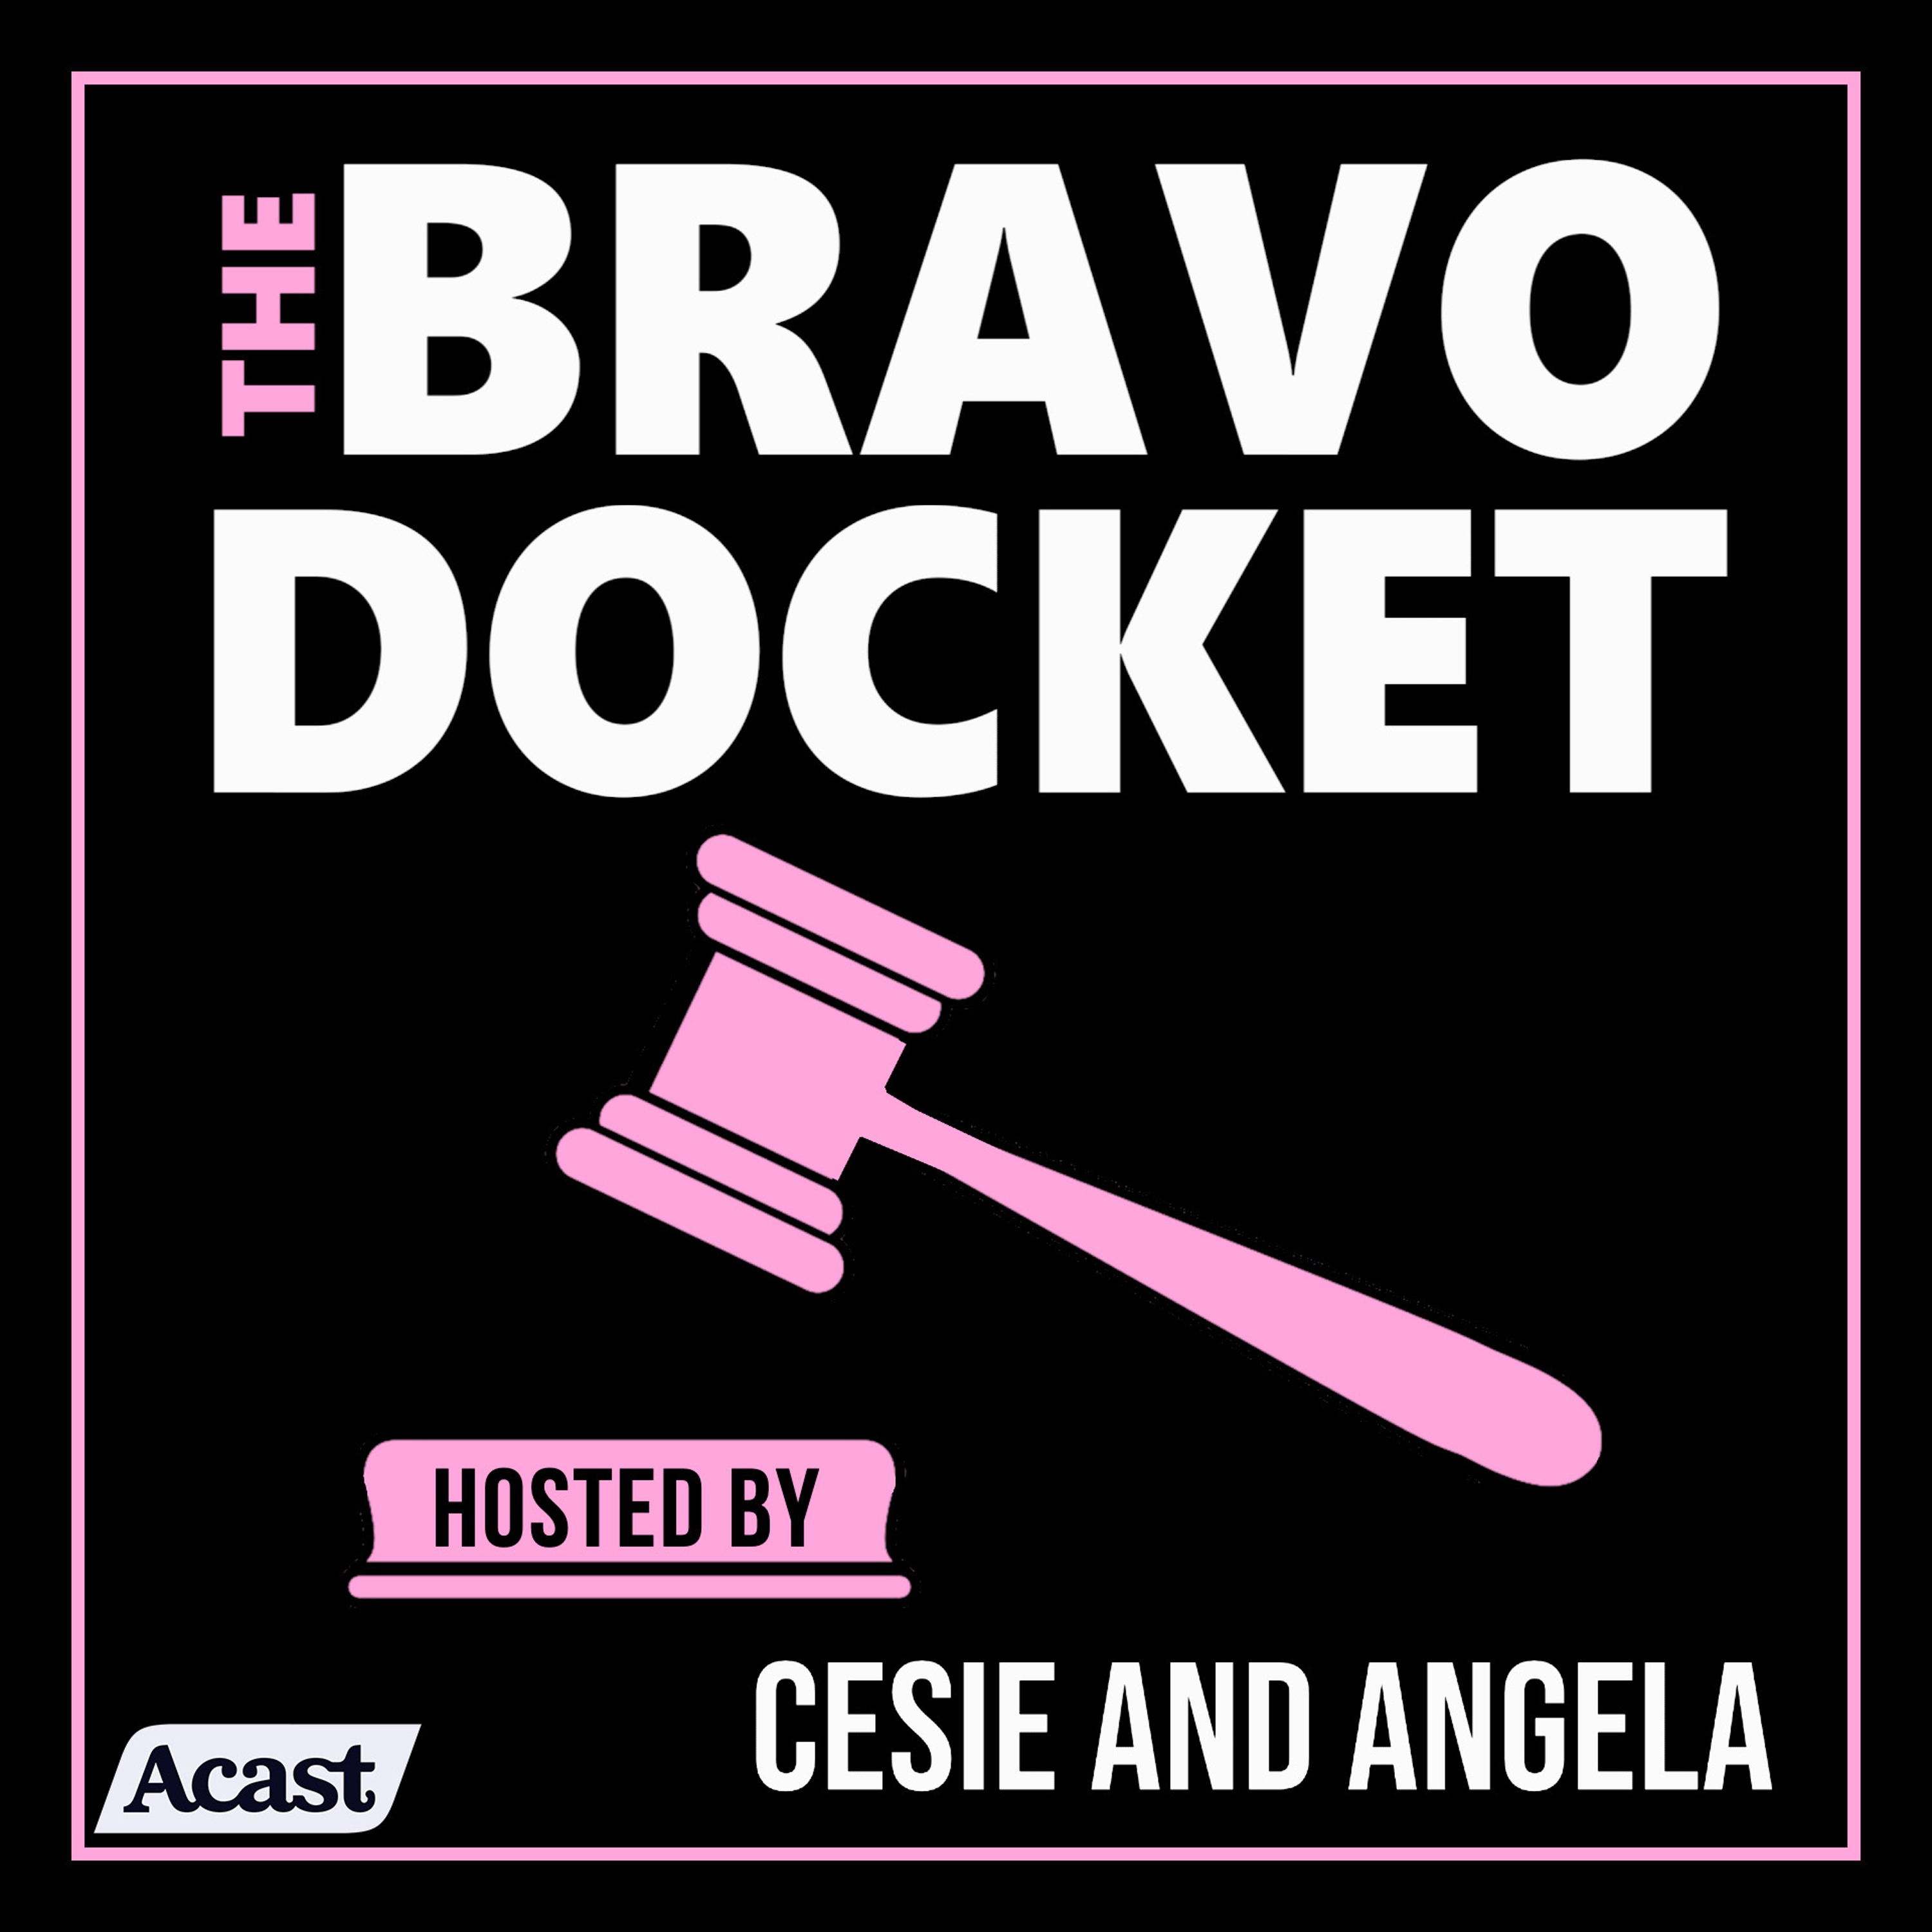 The Bravo Docket:The Docket, LLC